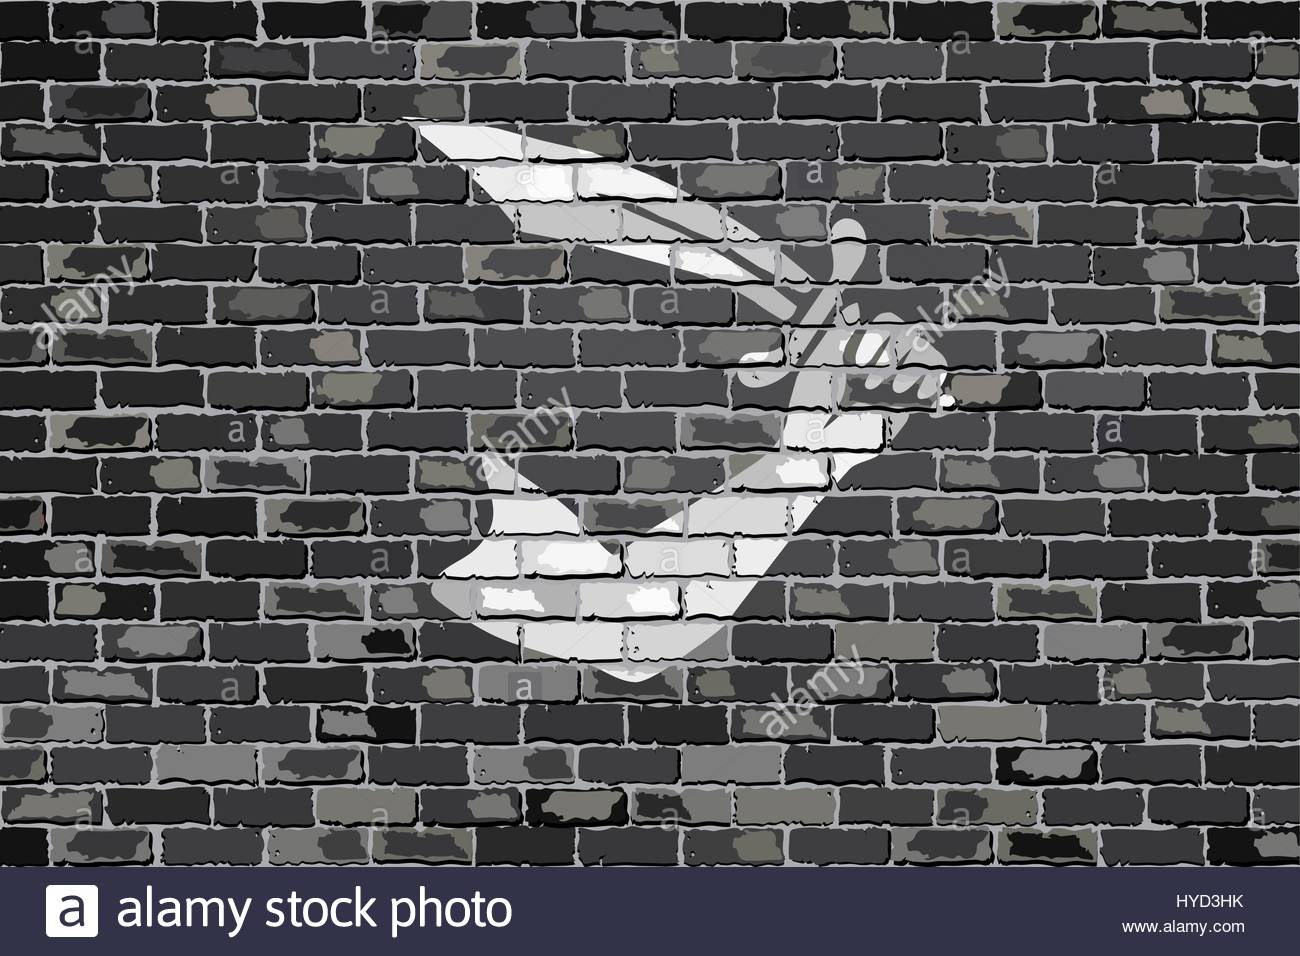 Pirate Flag On A Brick Wall Illustration Thomas Tew